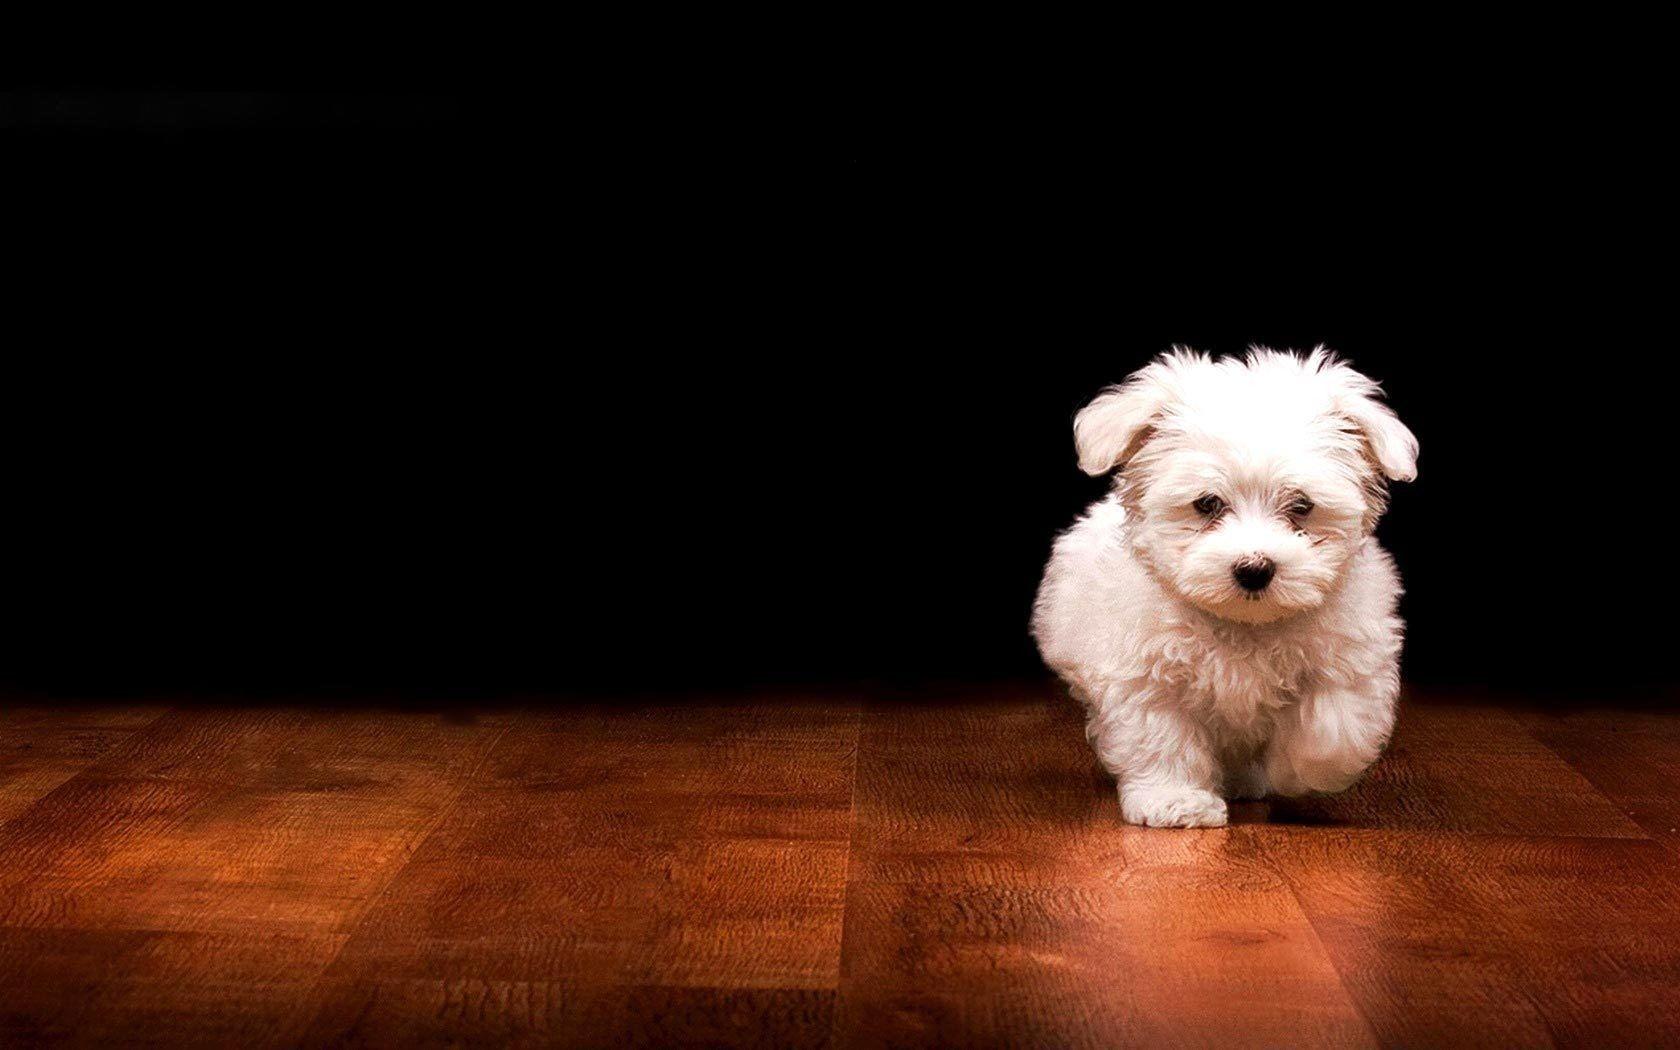 Cute Puppy Desktop Wallpapers - Top Free Cute Puppy Desktop Backgrounds